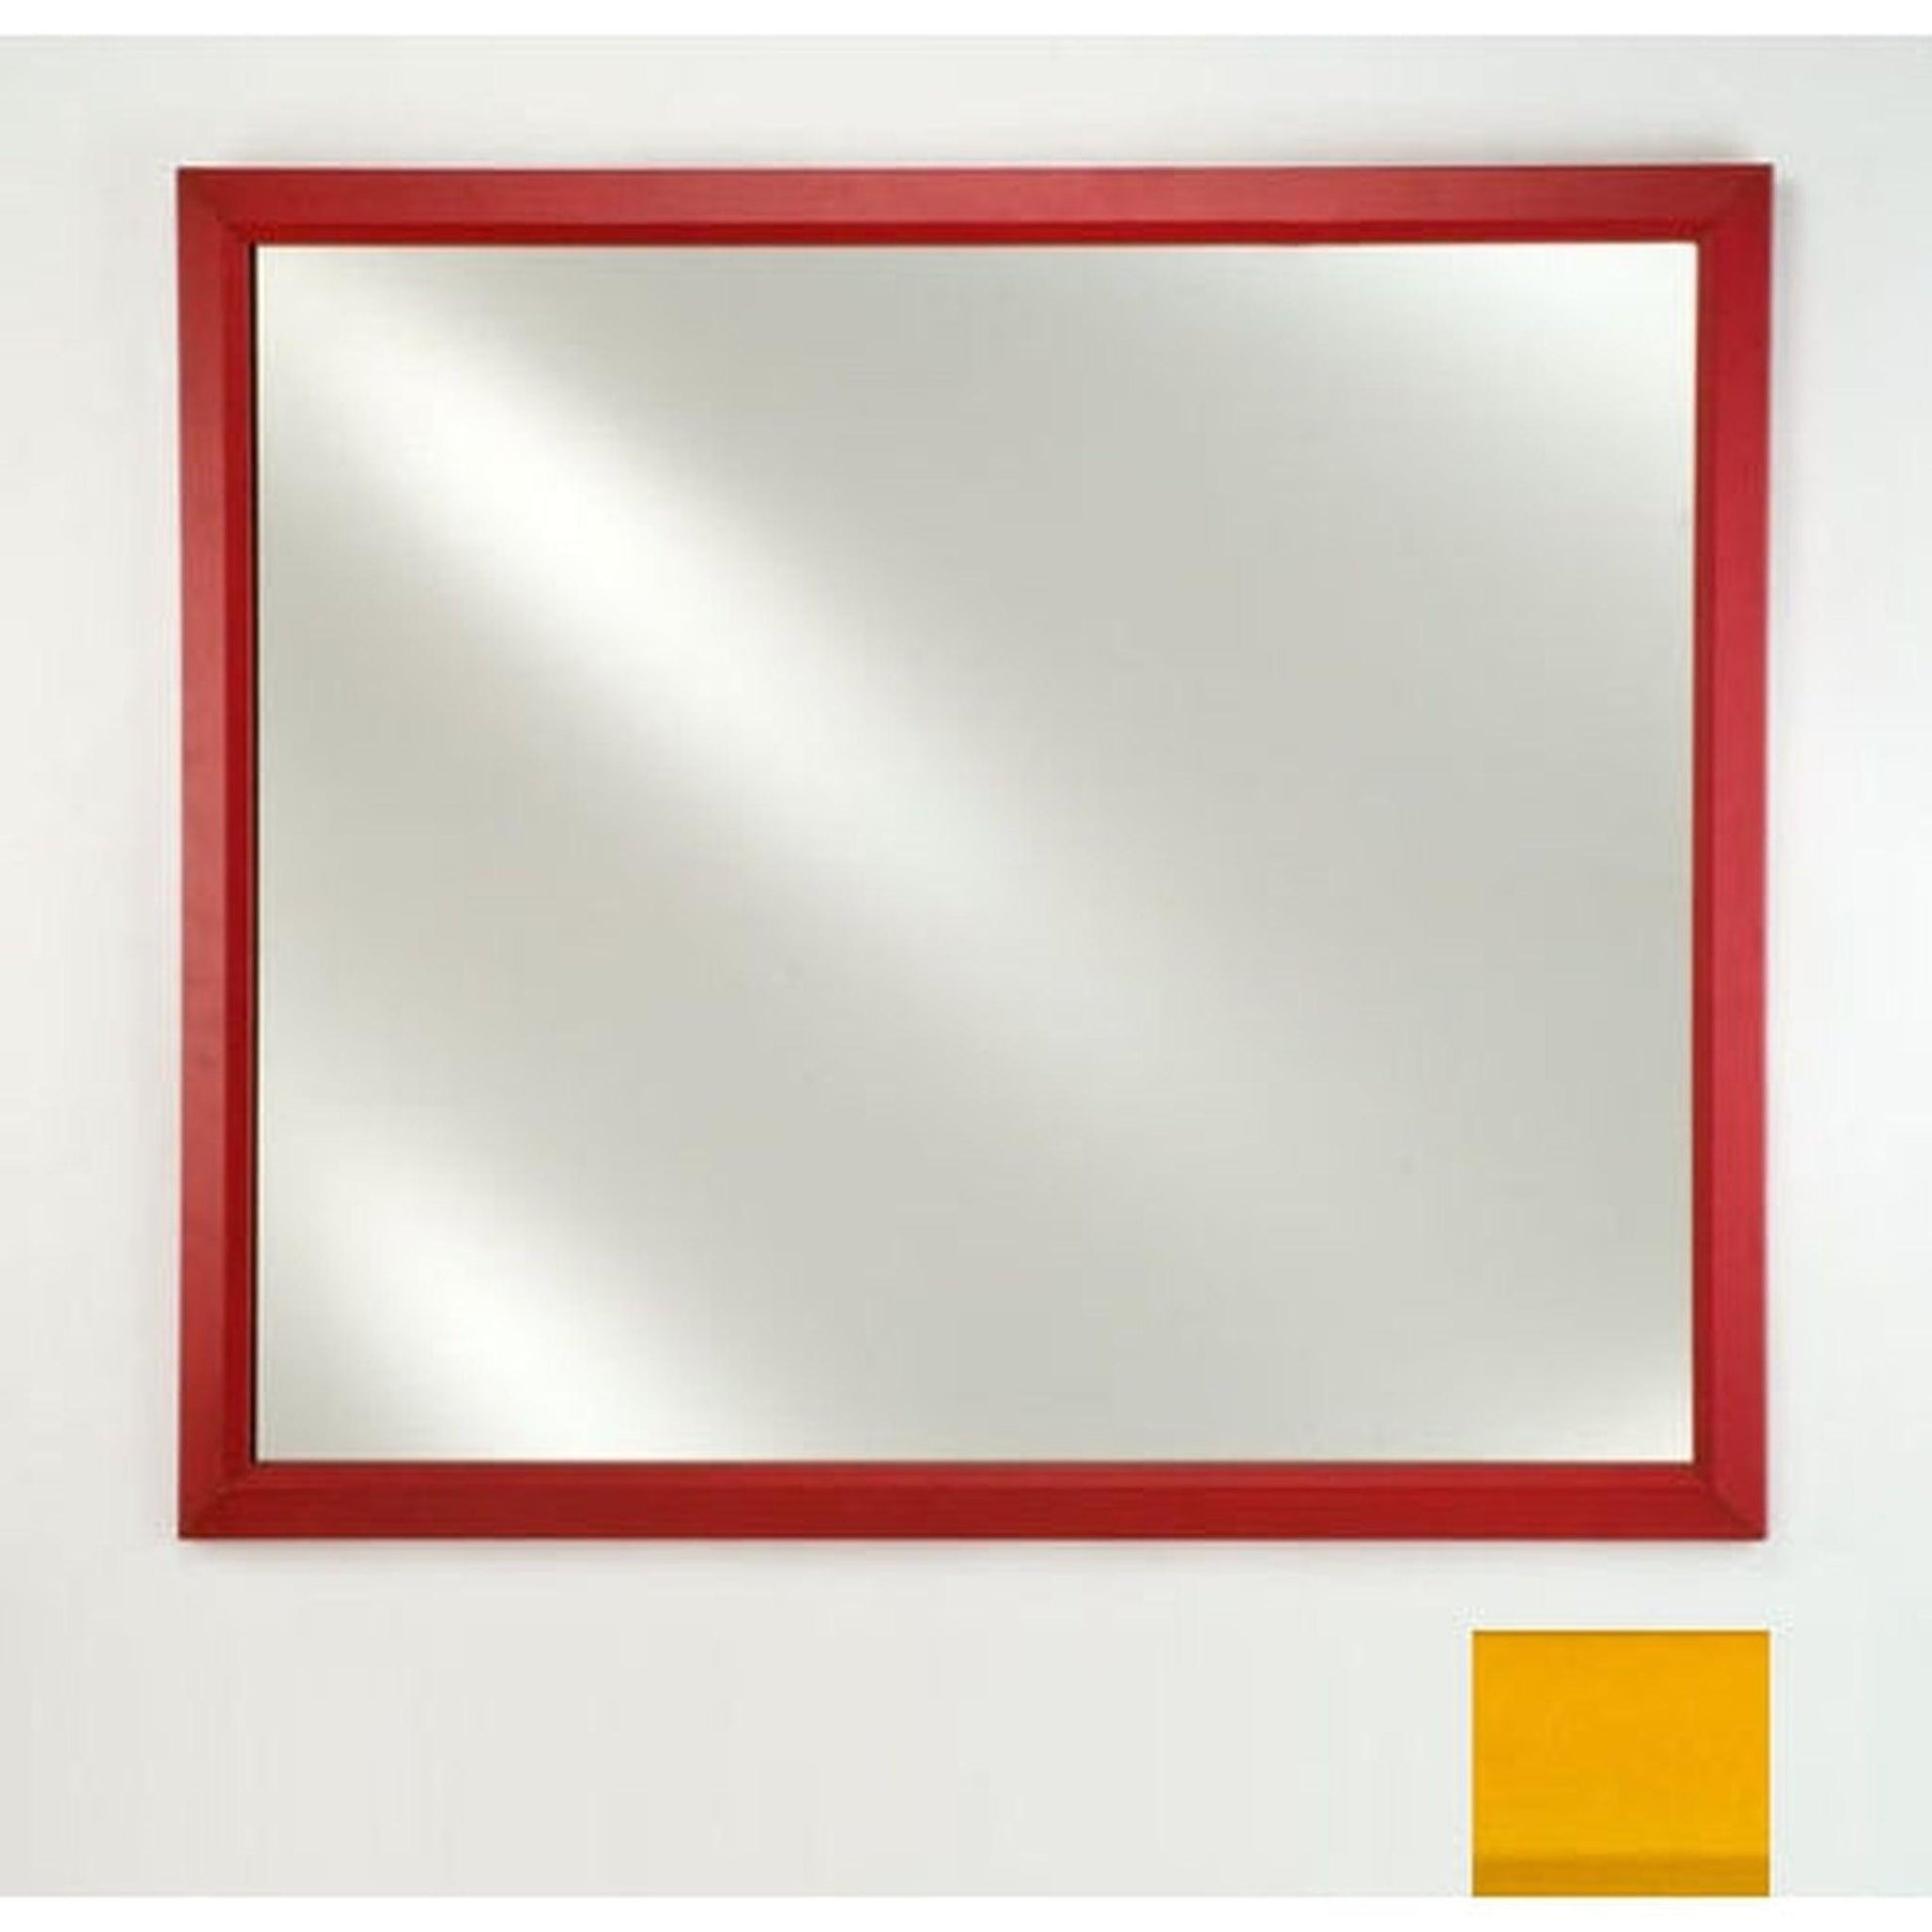 Afina Signature 20" x 26" Colorgrain Yellow Framed Mirror With Plain Edge